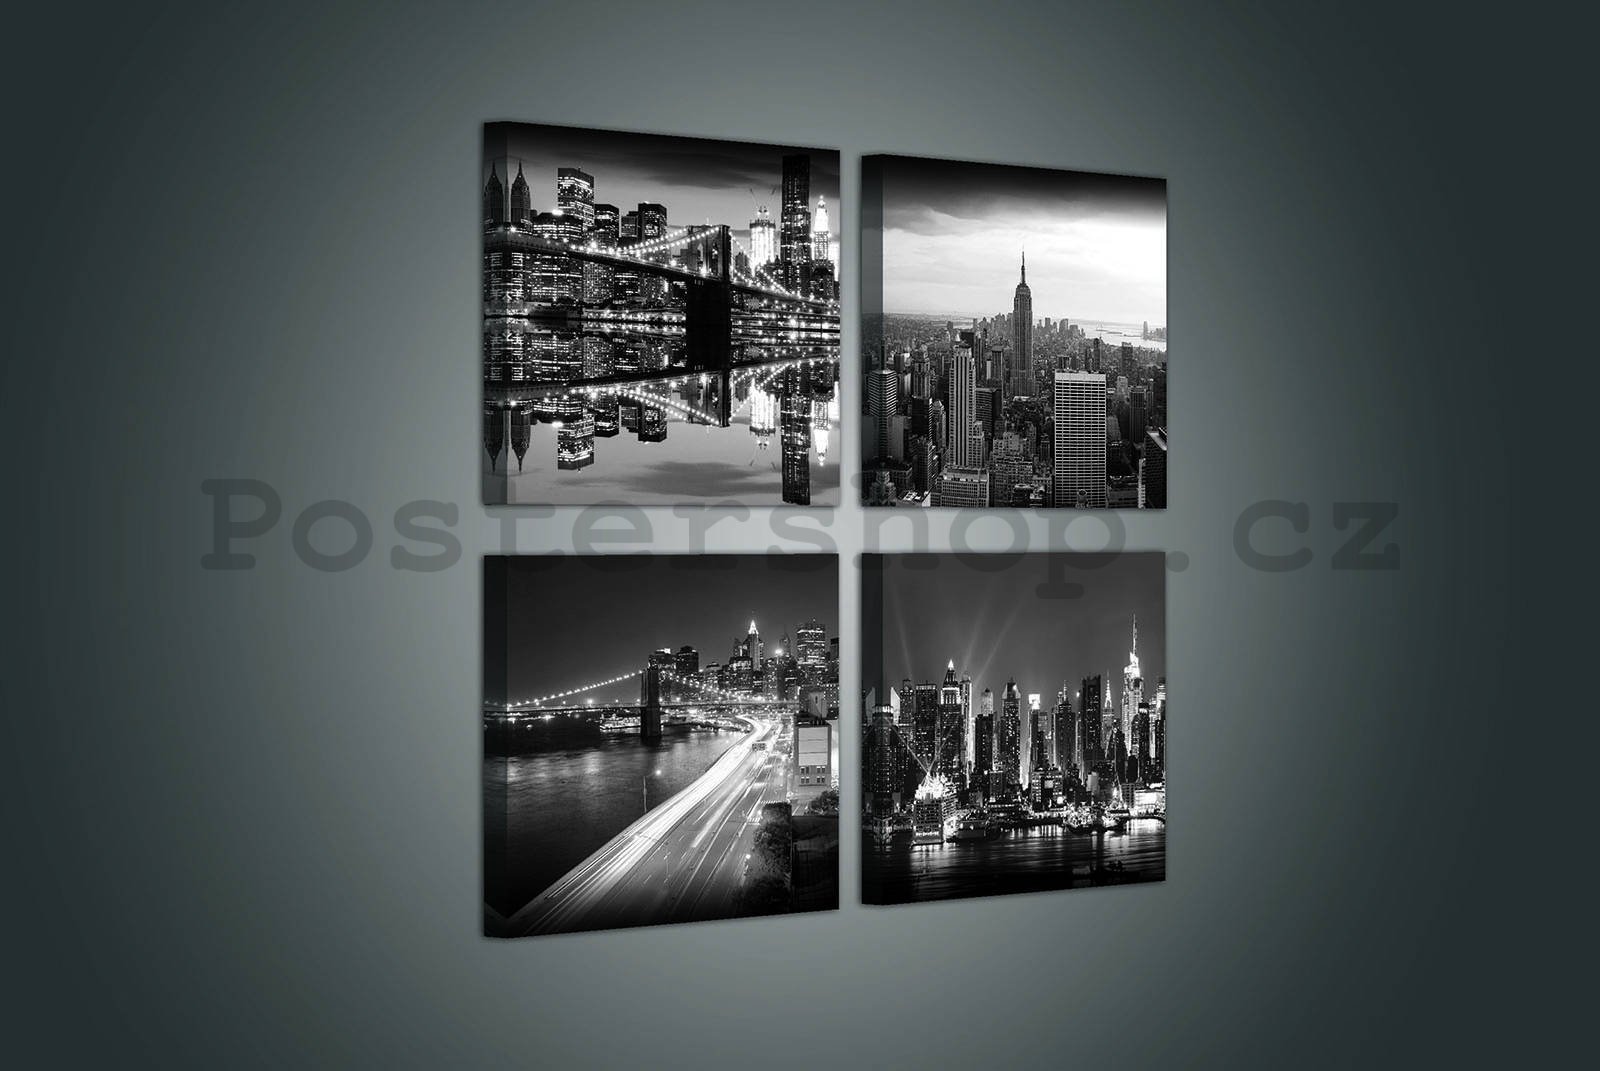 Obraz na plátně: Černobílý New York (2) - set 4ks 25x25cm